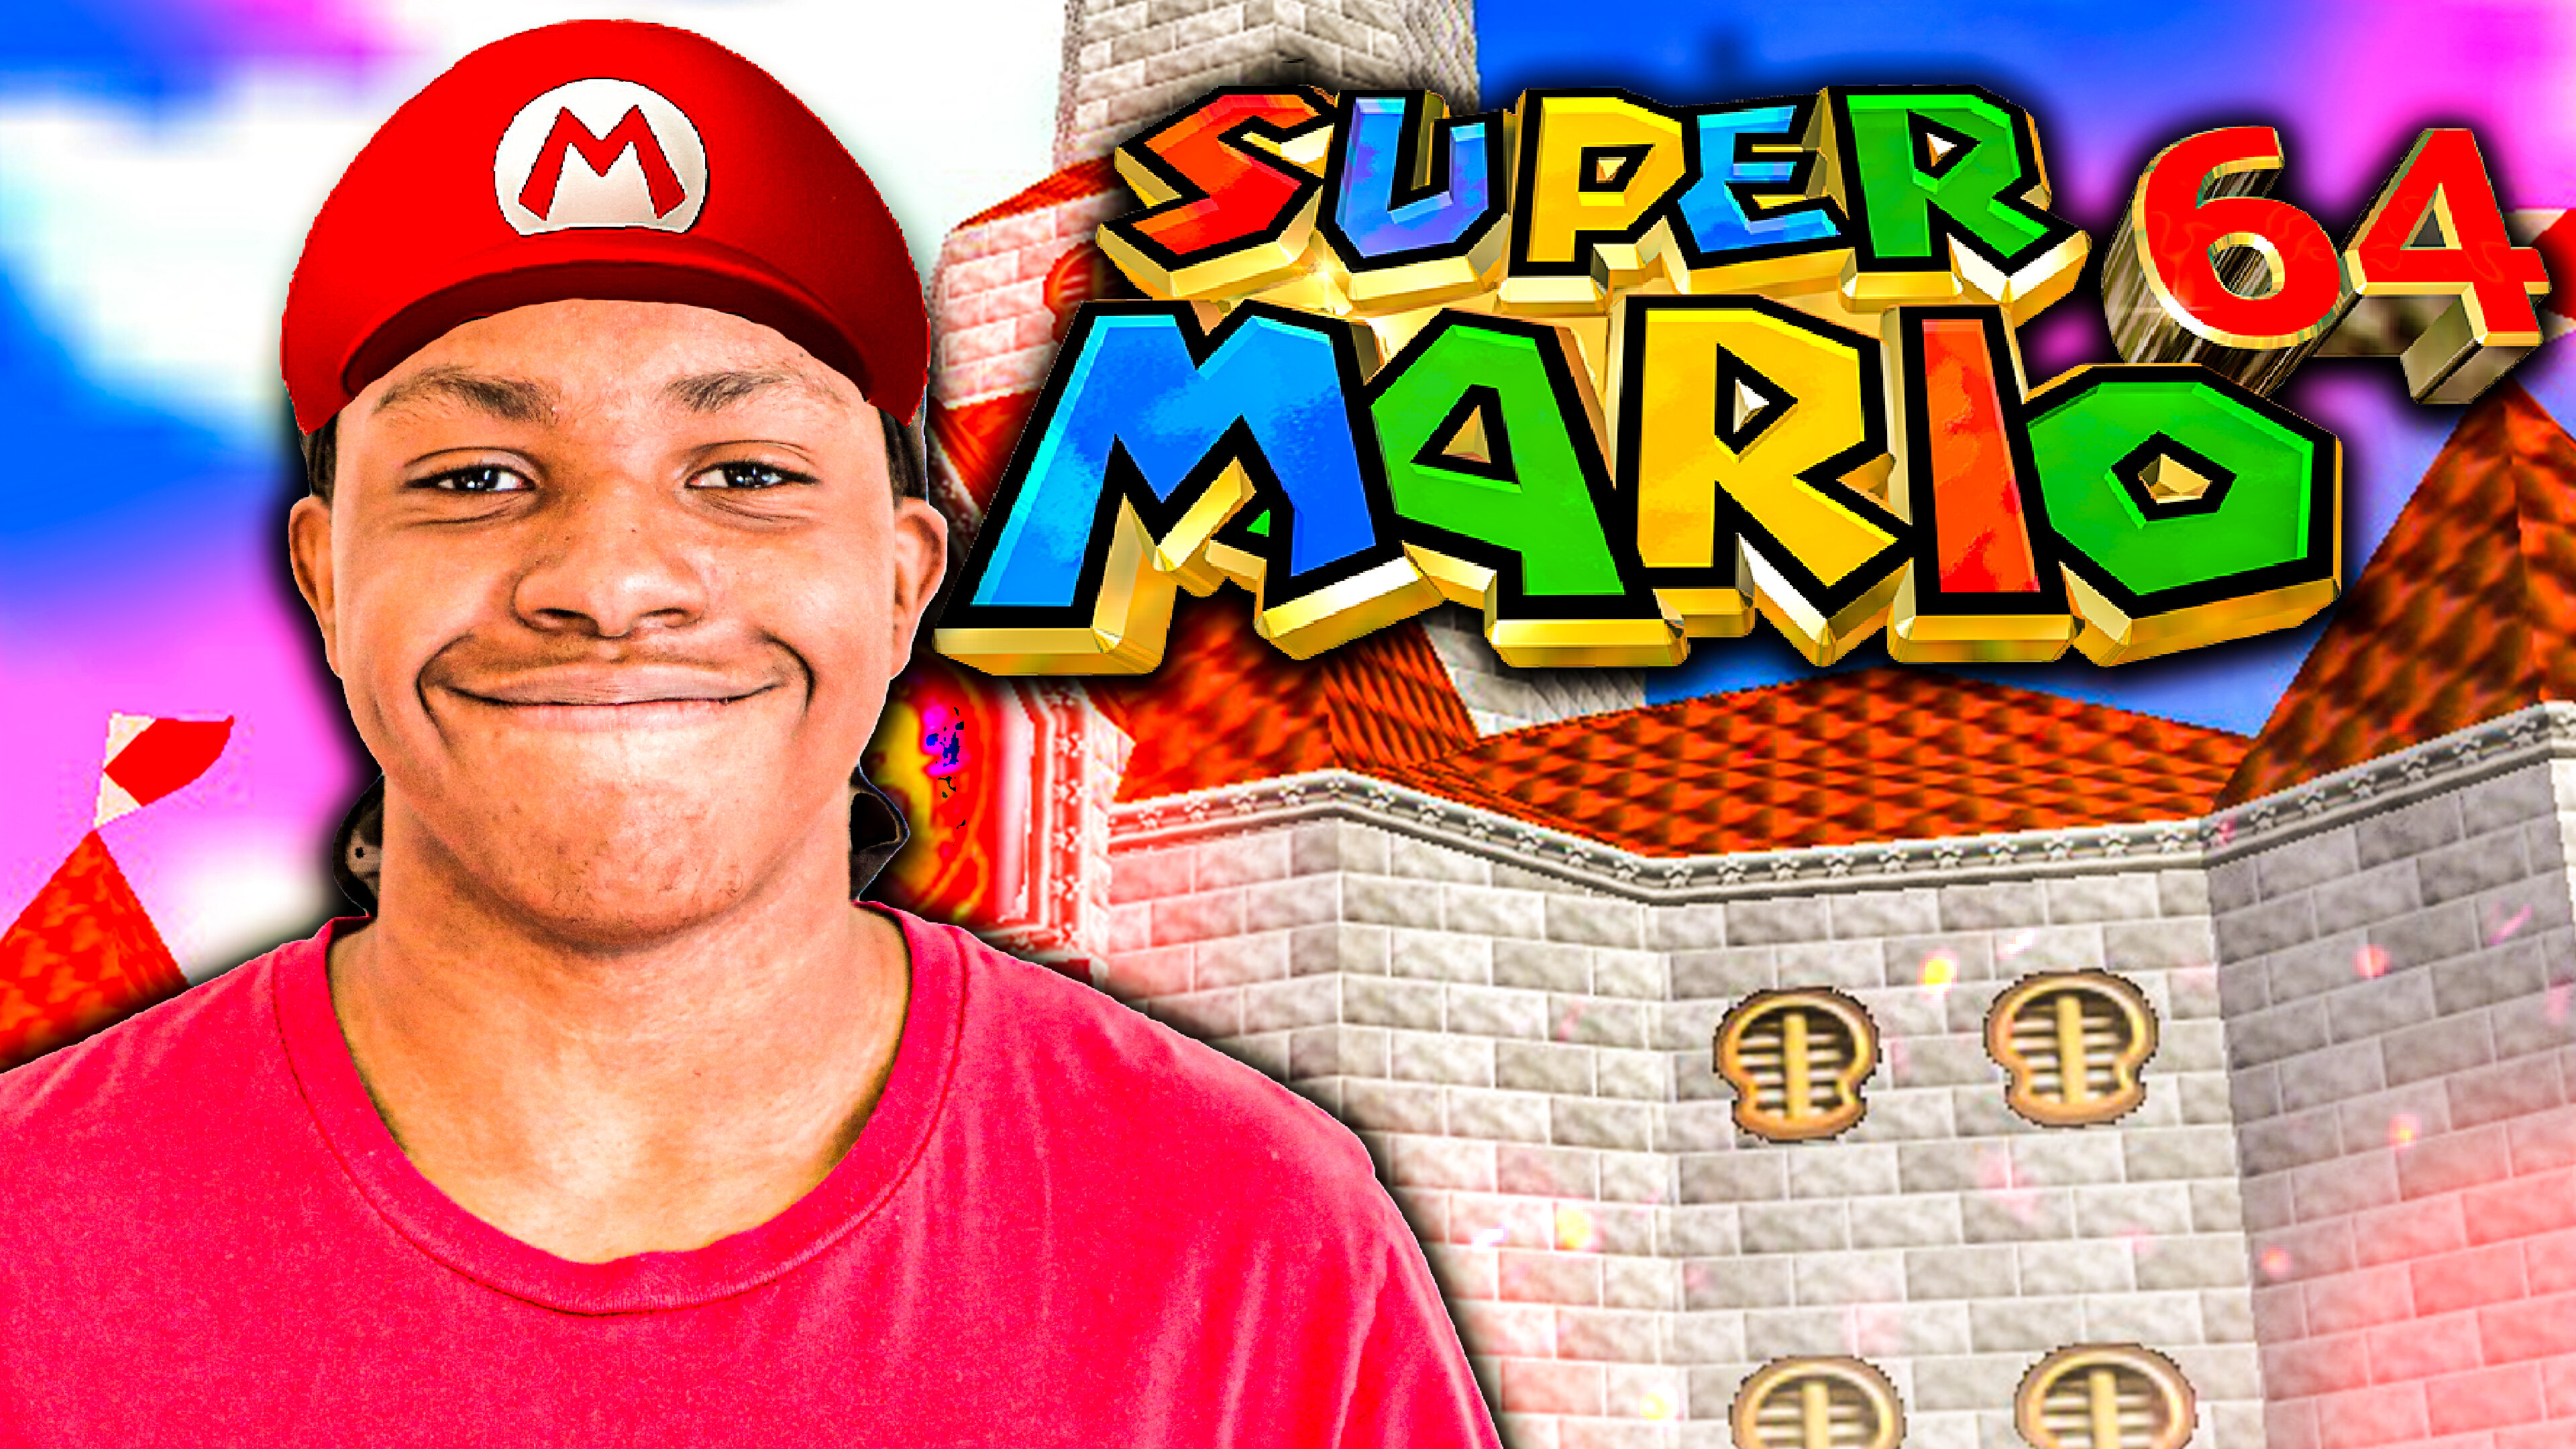 Trent's Mario 64 Walkthrough